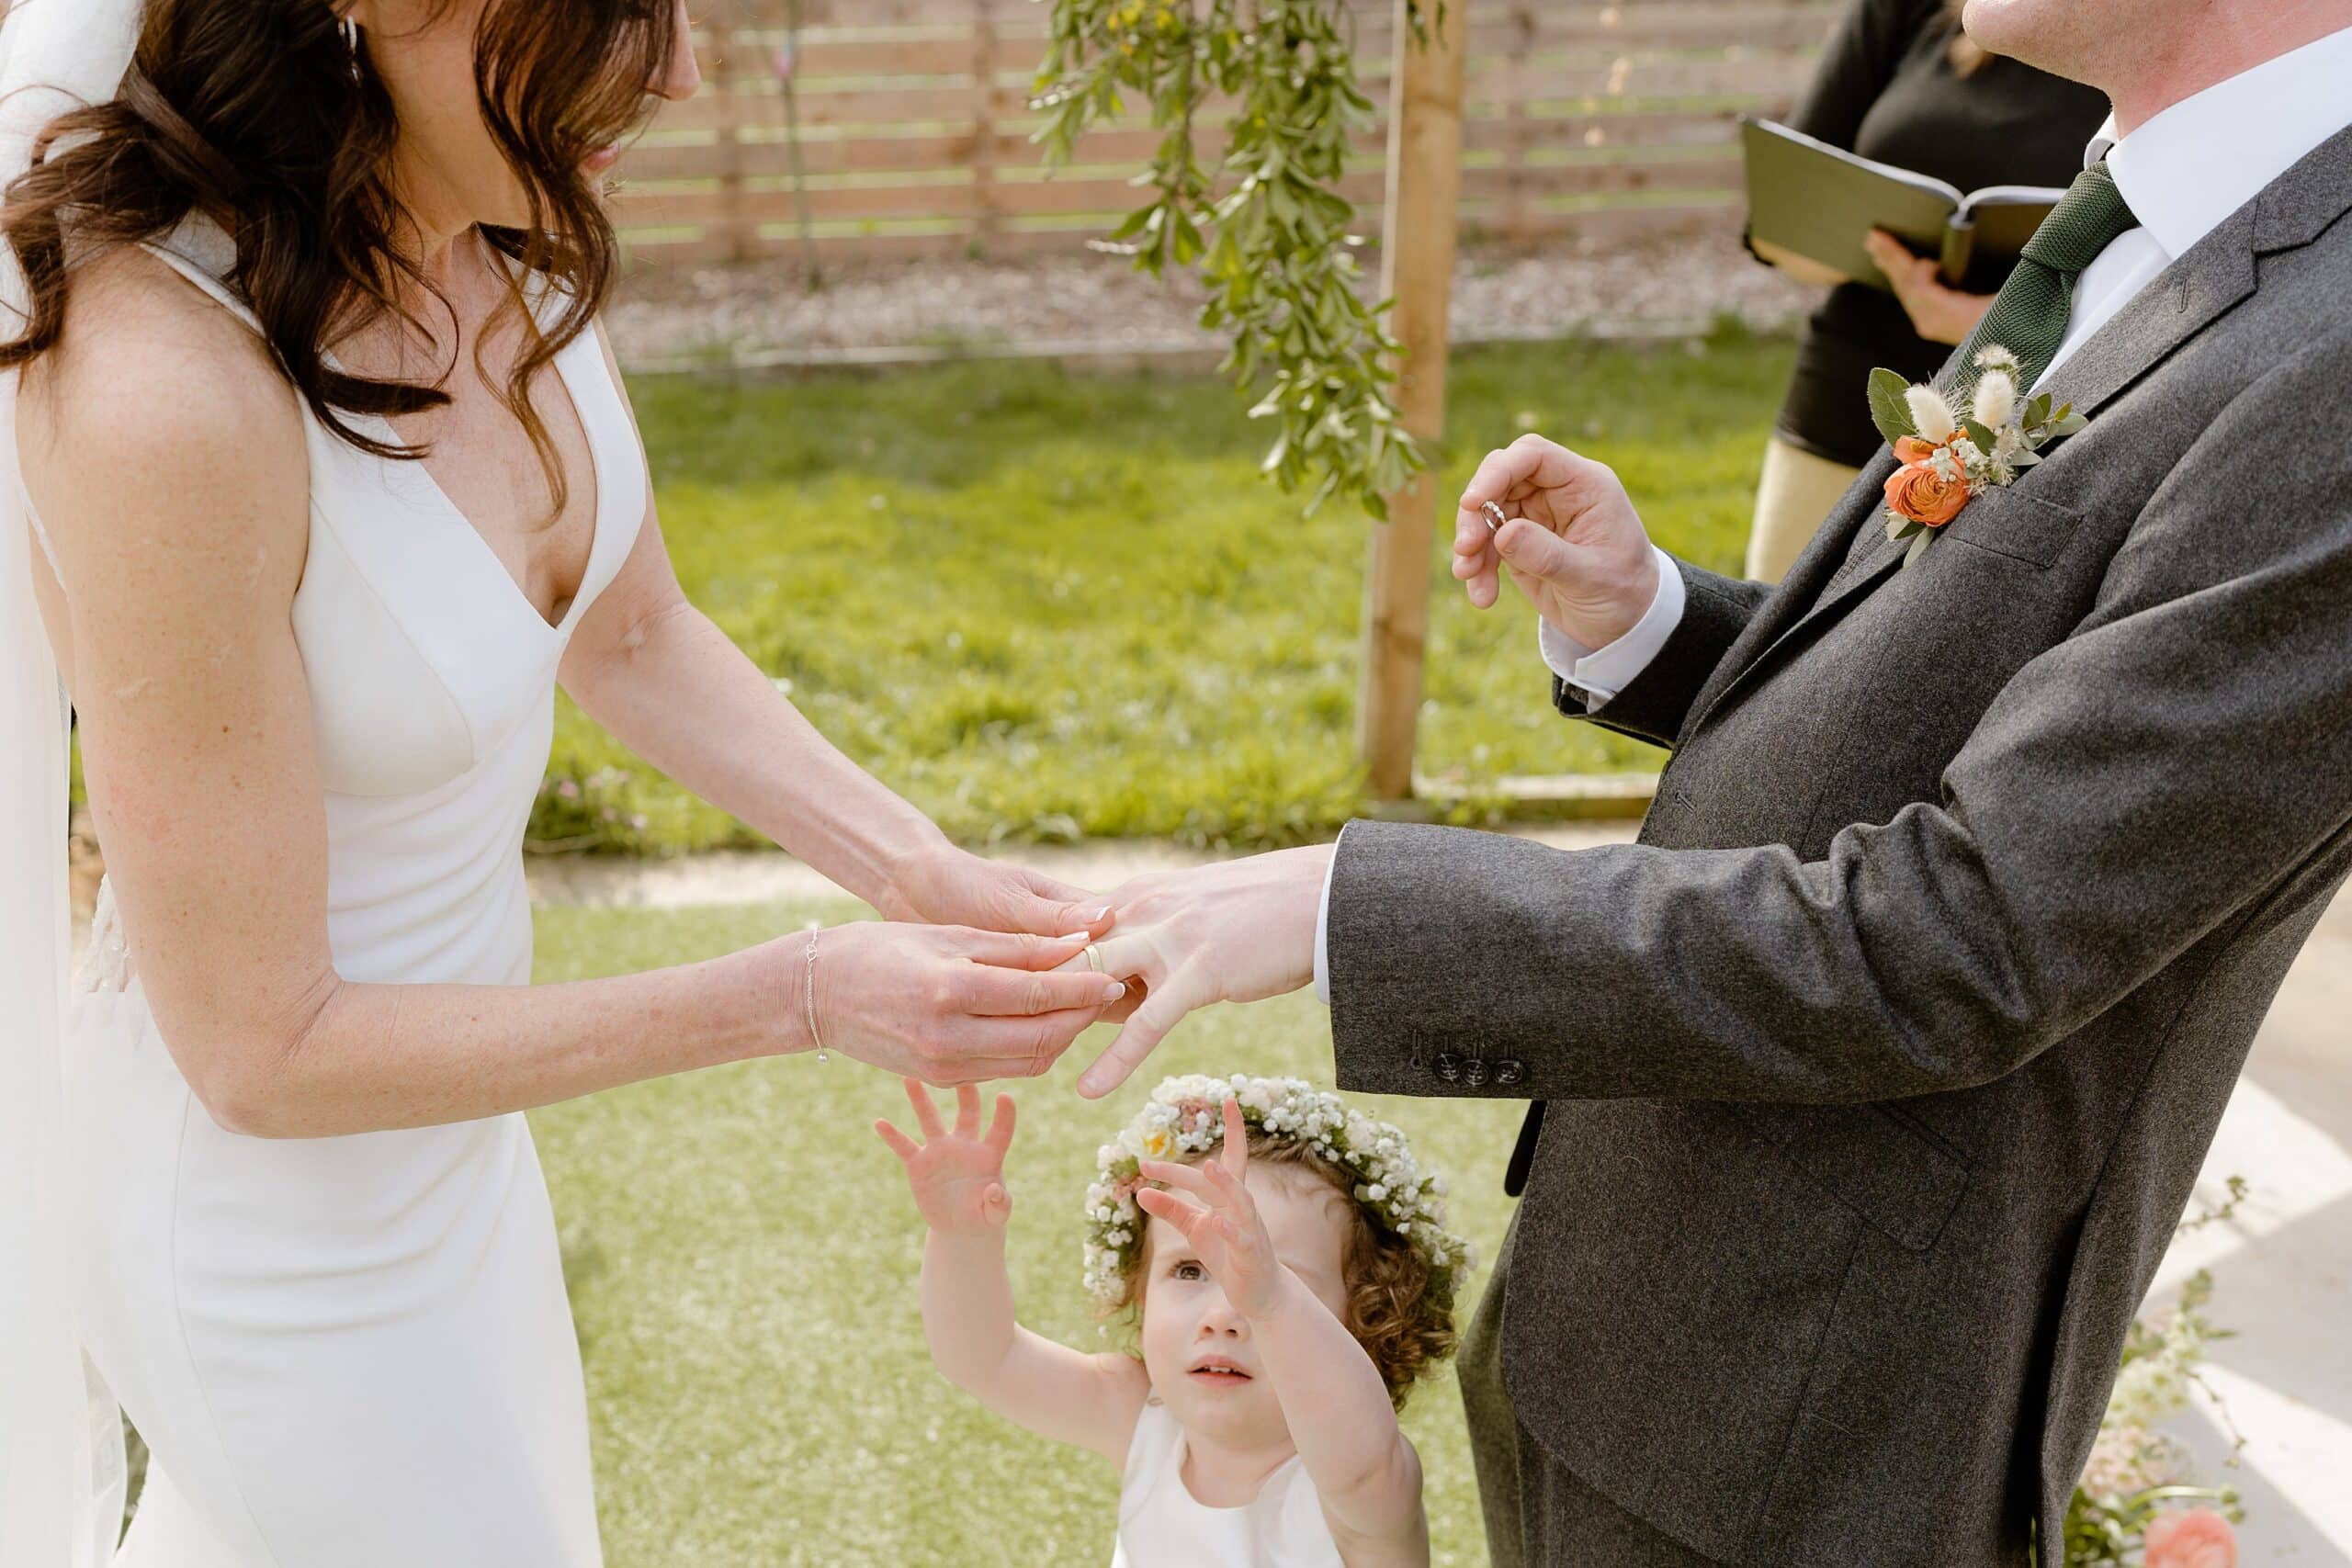 the bride and groom exchange rings during their unusual wedding venues east lothian wedding ceremony near edinburgh scotland